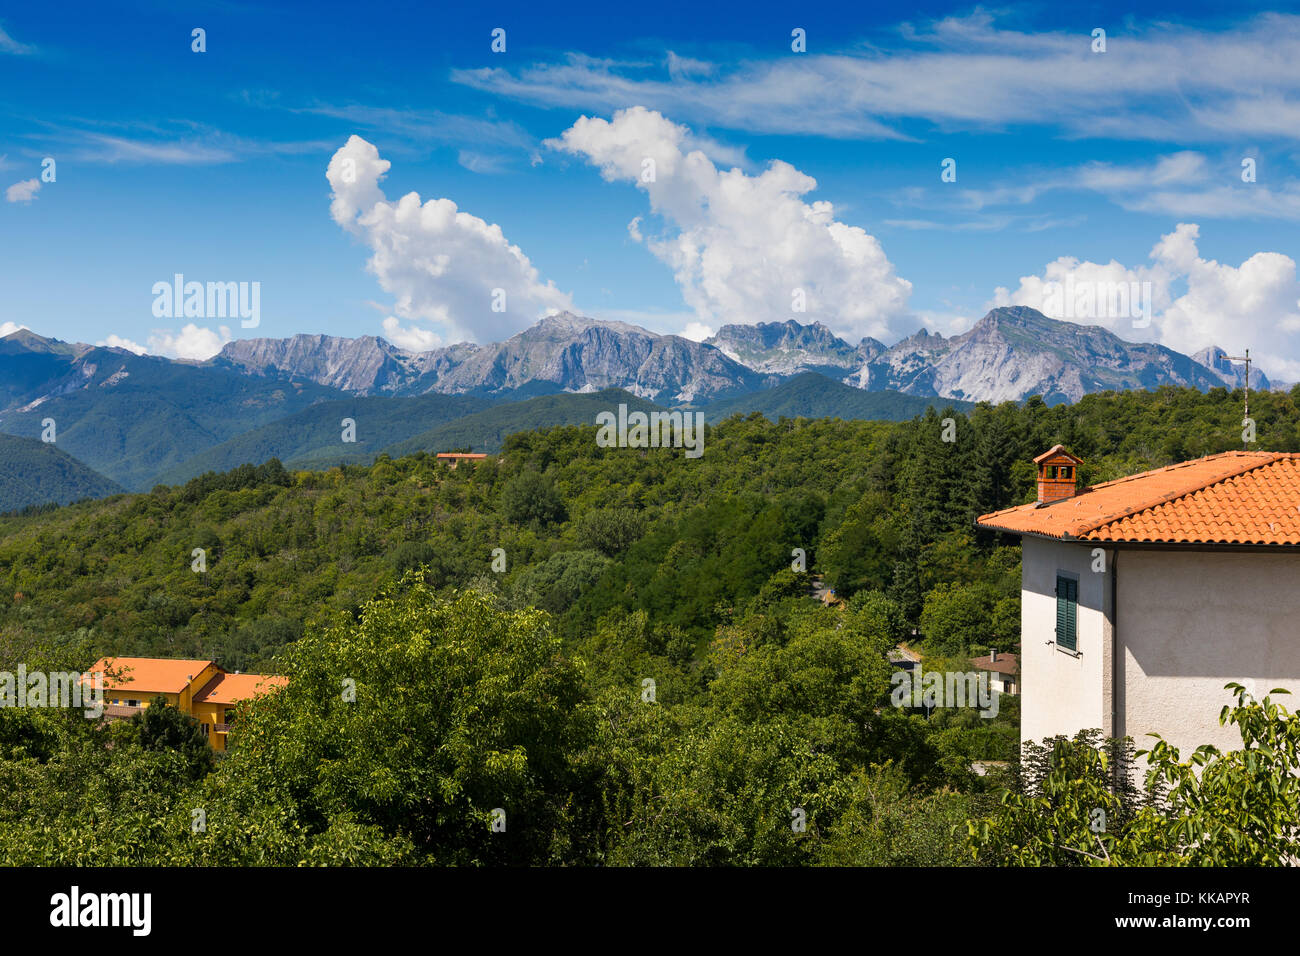 Alpes Apuanes, vue de corfino, Garfagnana, Toscane, Italie, Europe Banque D'Images